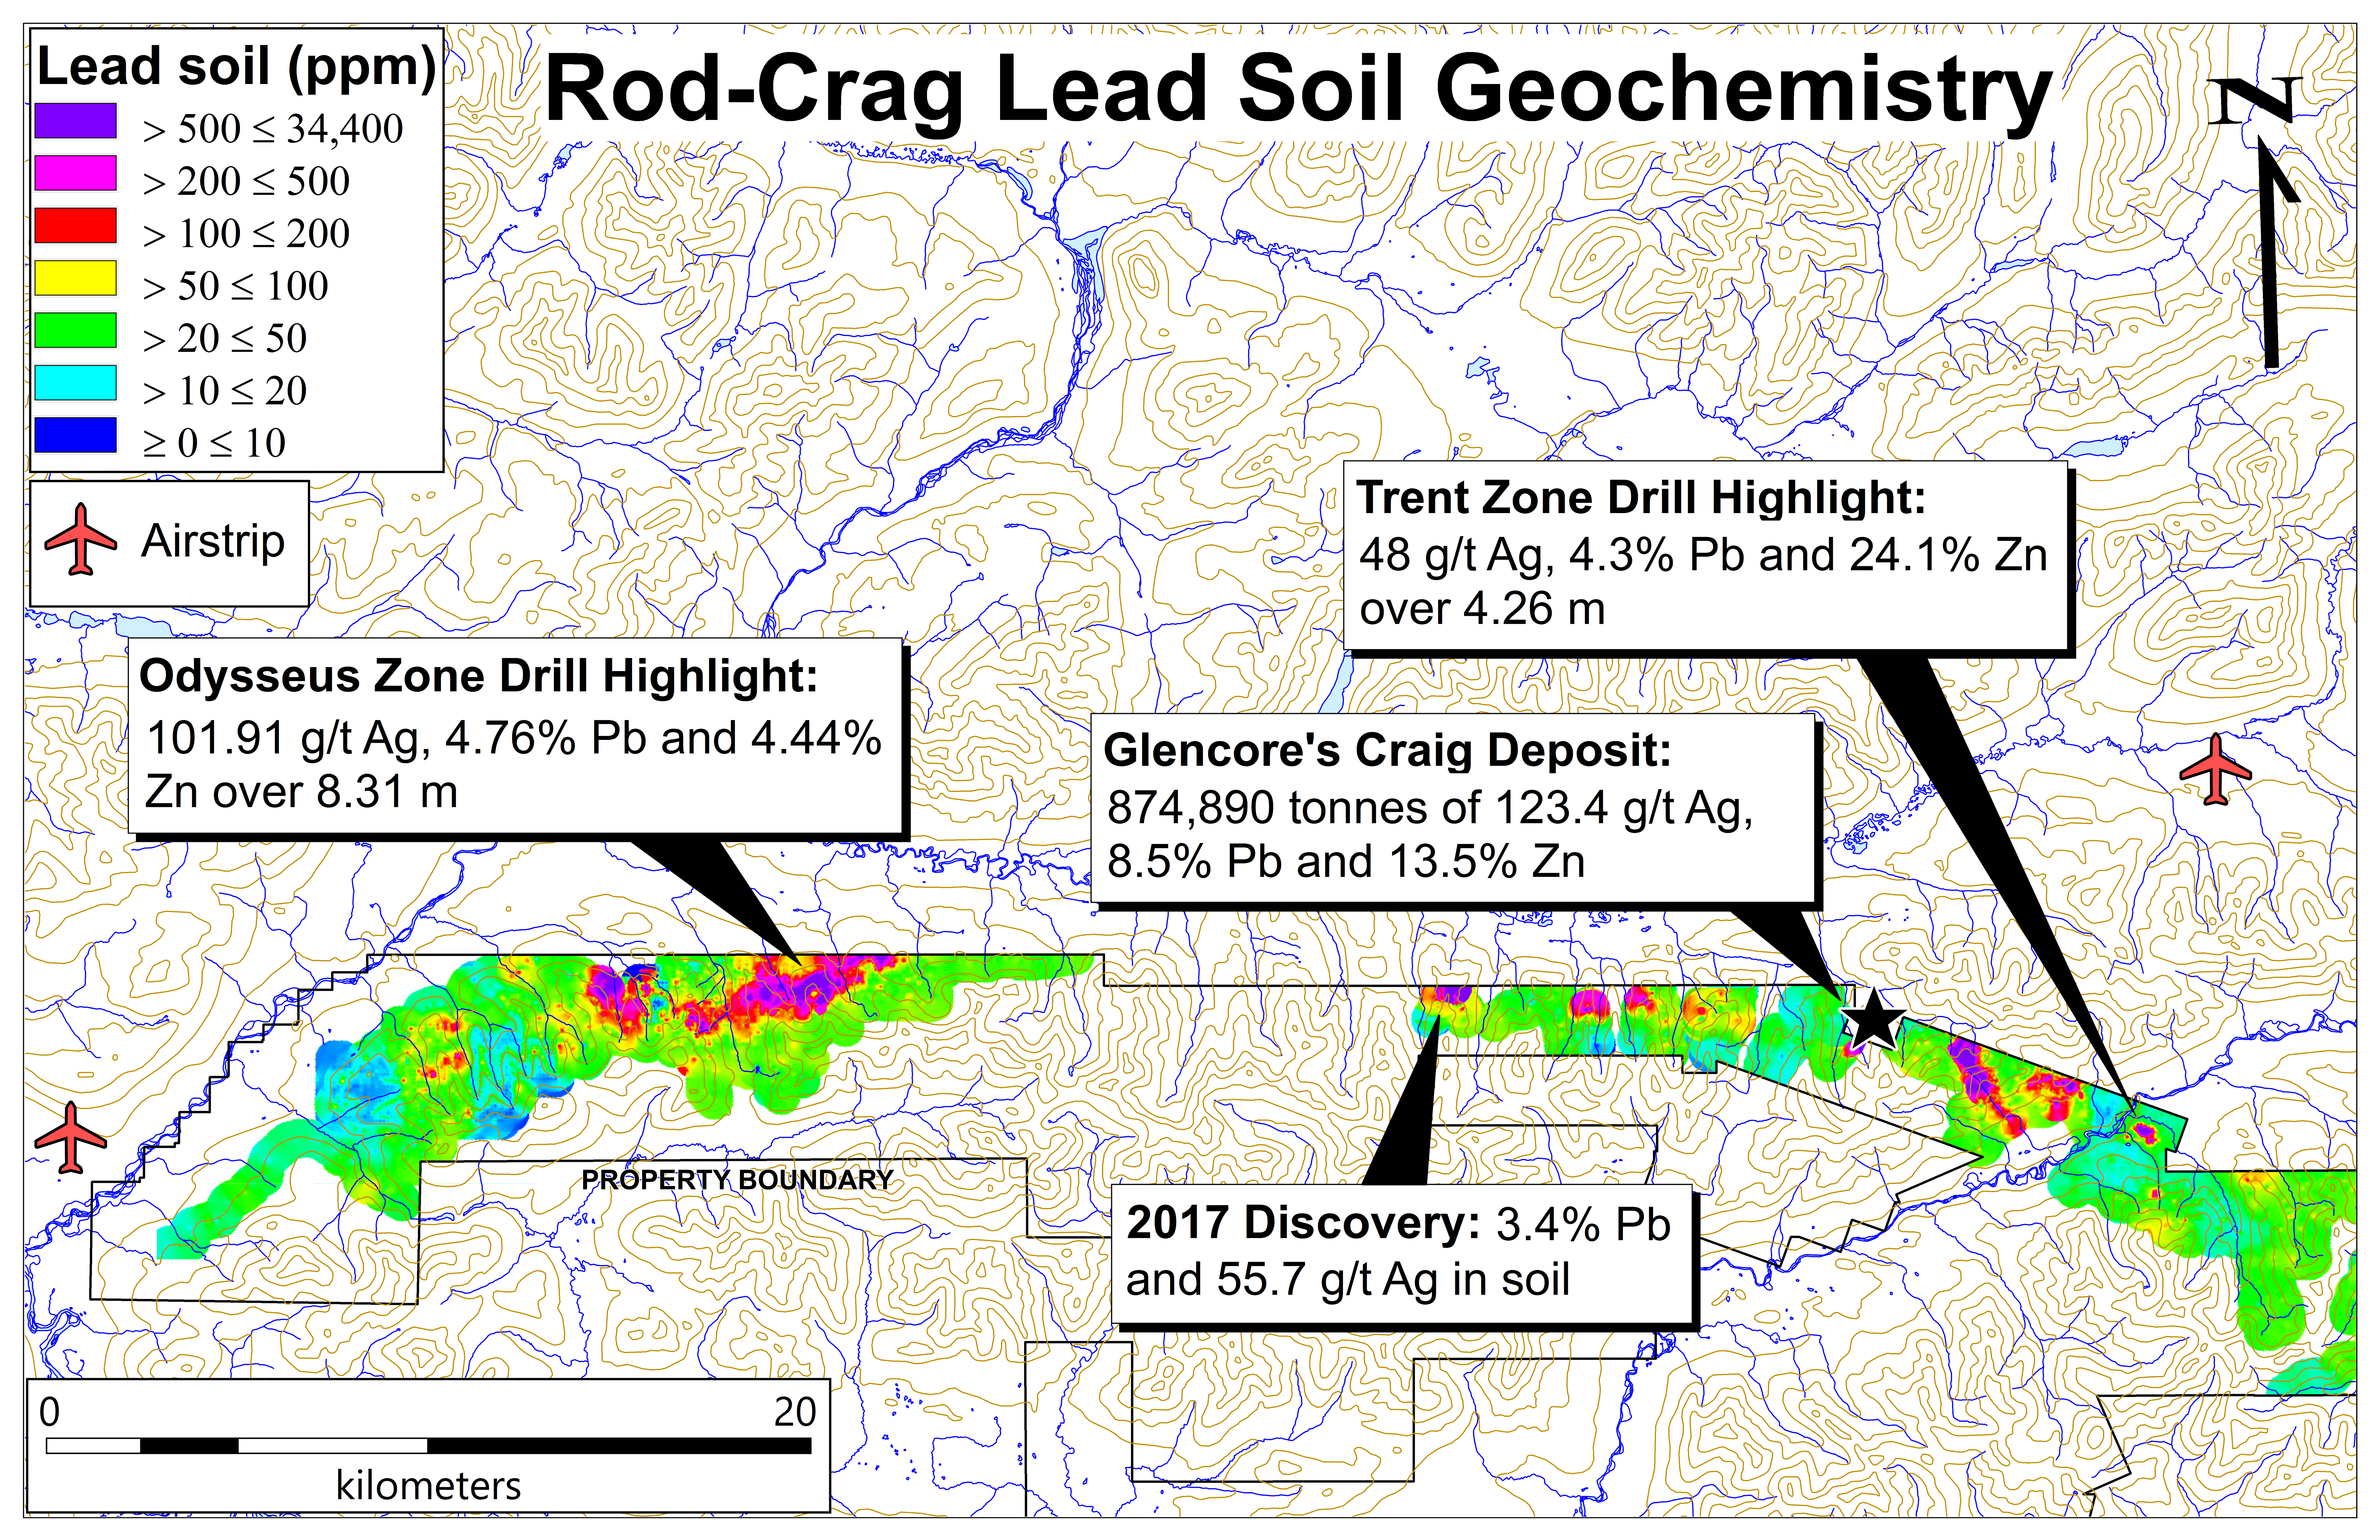 Rod-Crag lead soil geochemistry